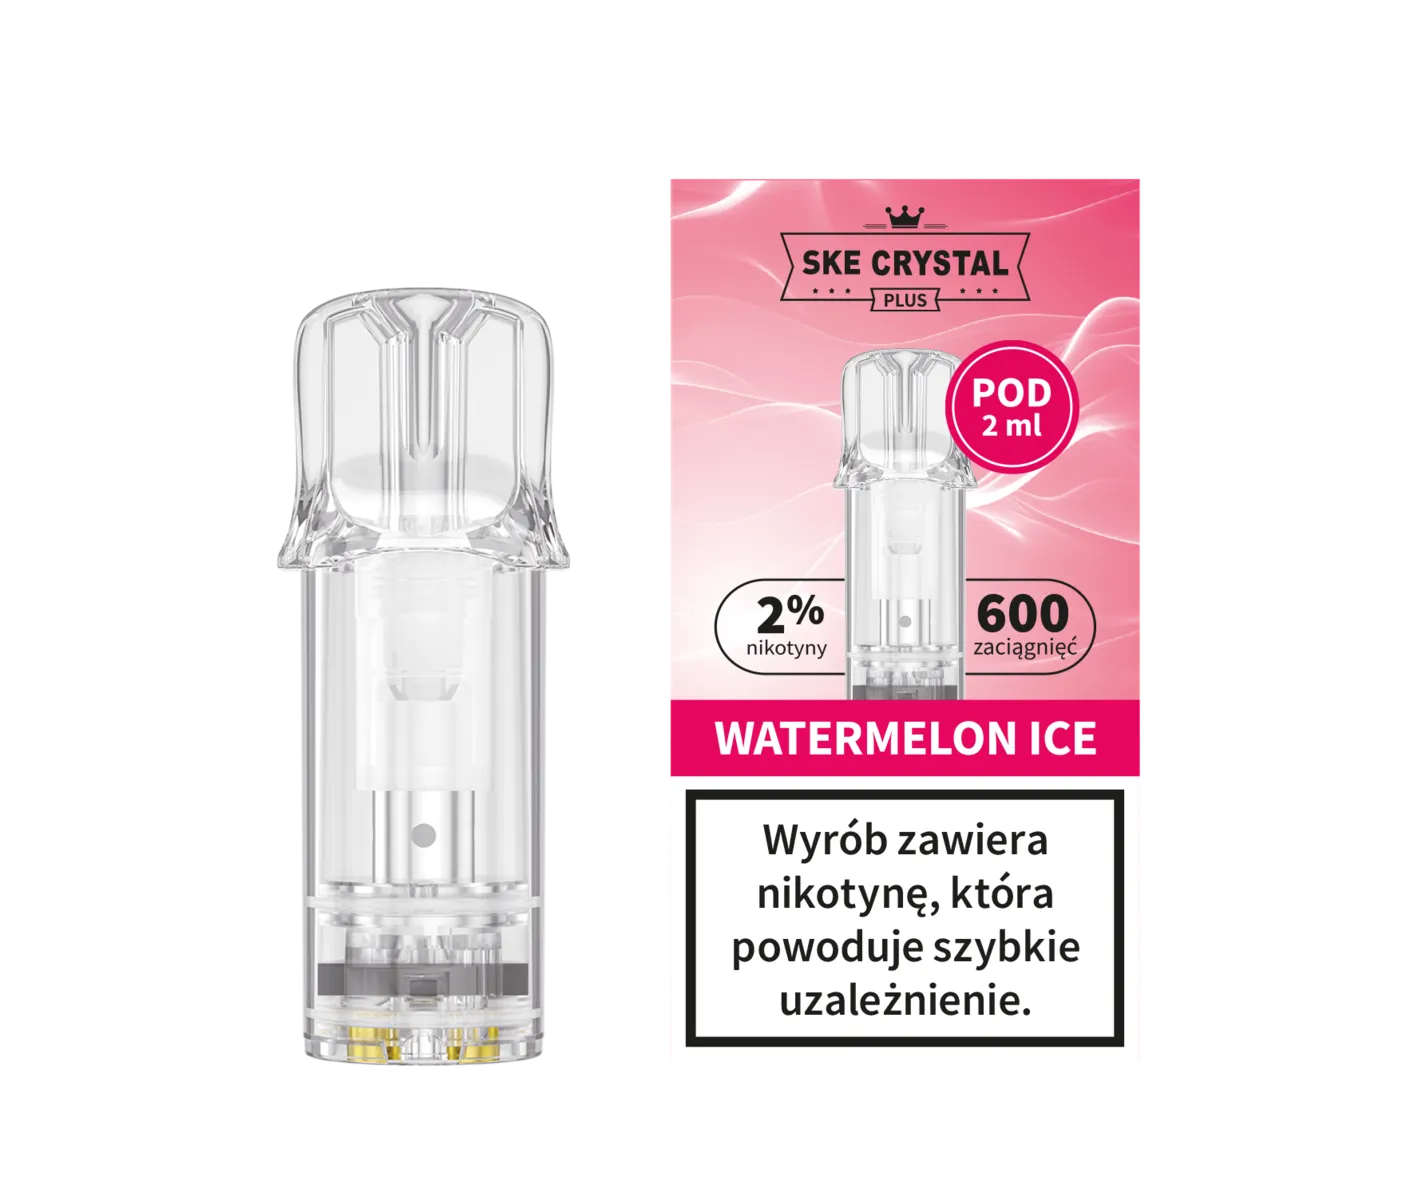 POD Crystal Plus WATERMELON ICE